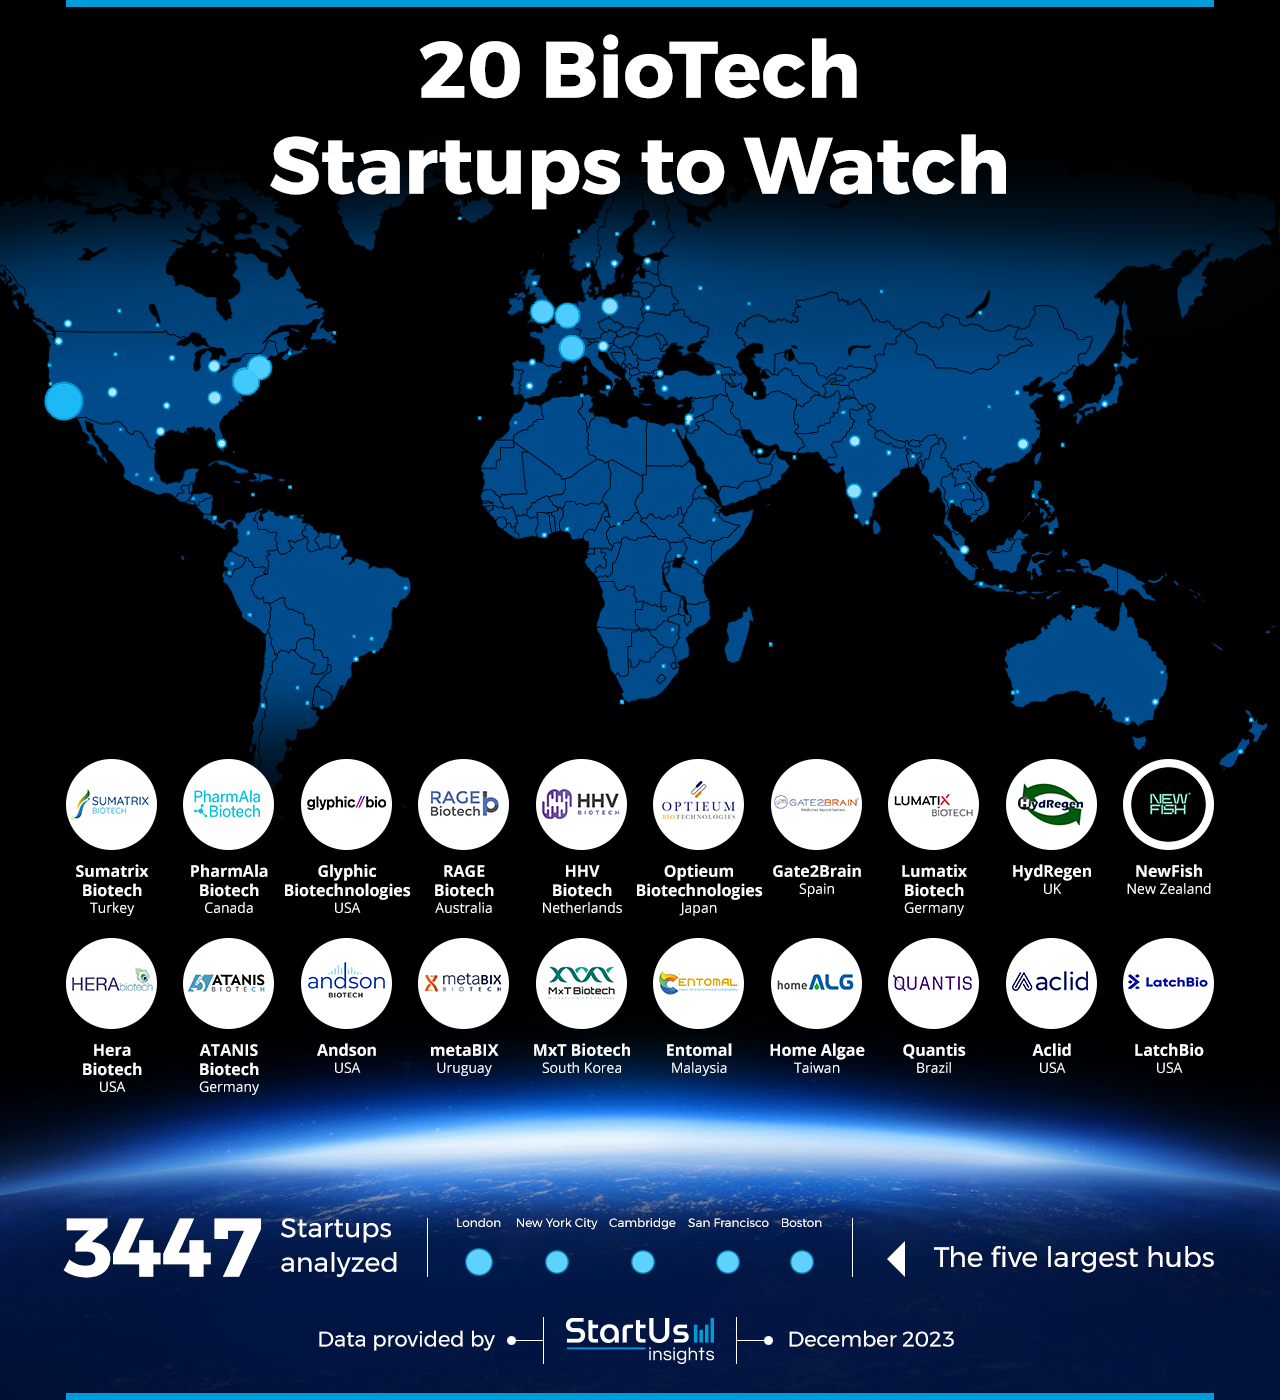 BioTech-Startups-to-Watch-Heat-Map-StartUs-Insights-noresize